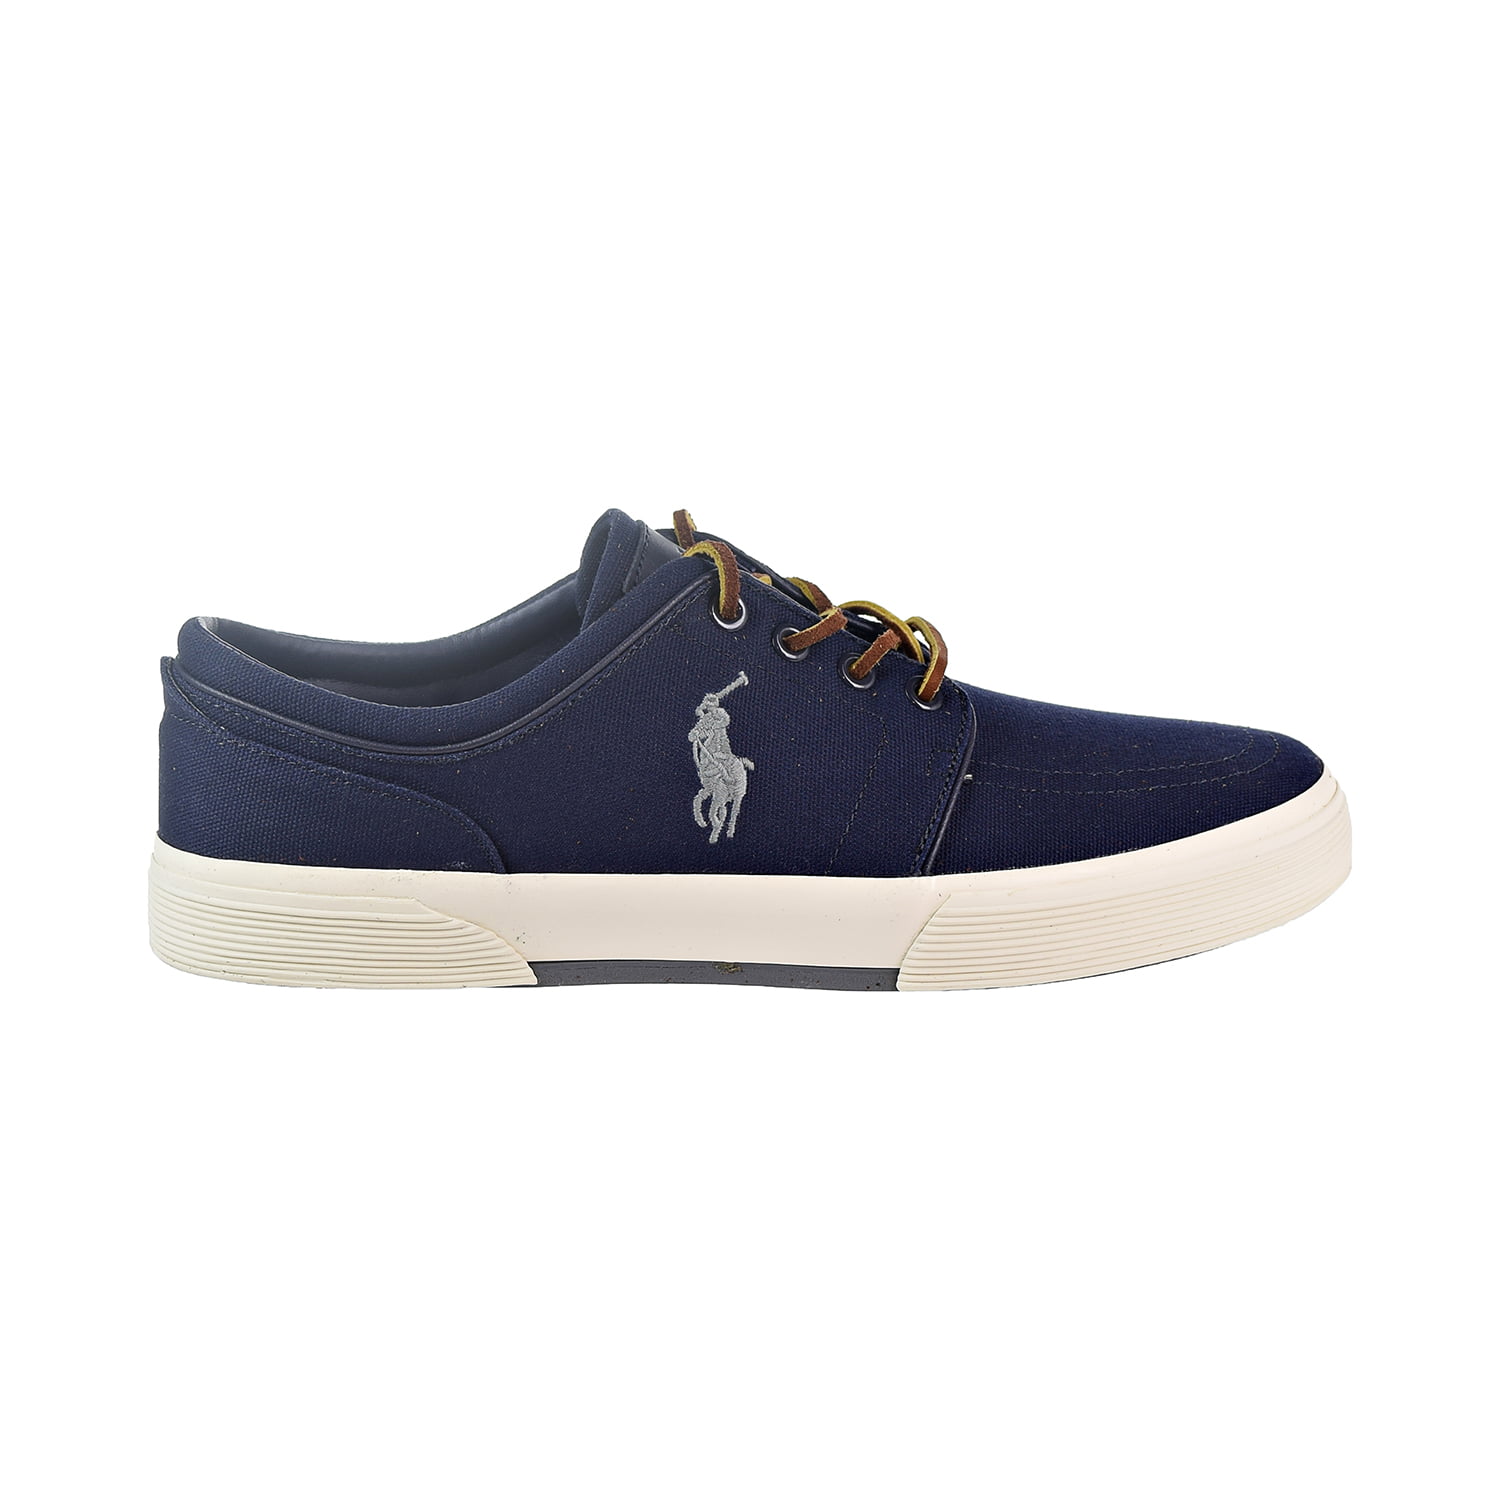 Polo Ralph Lauren Faxon Low Men's Shoes Navy/Grey 816507895-030 -  